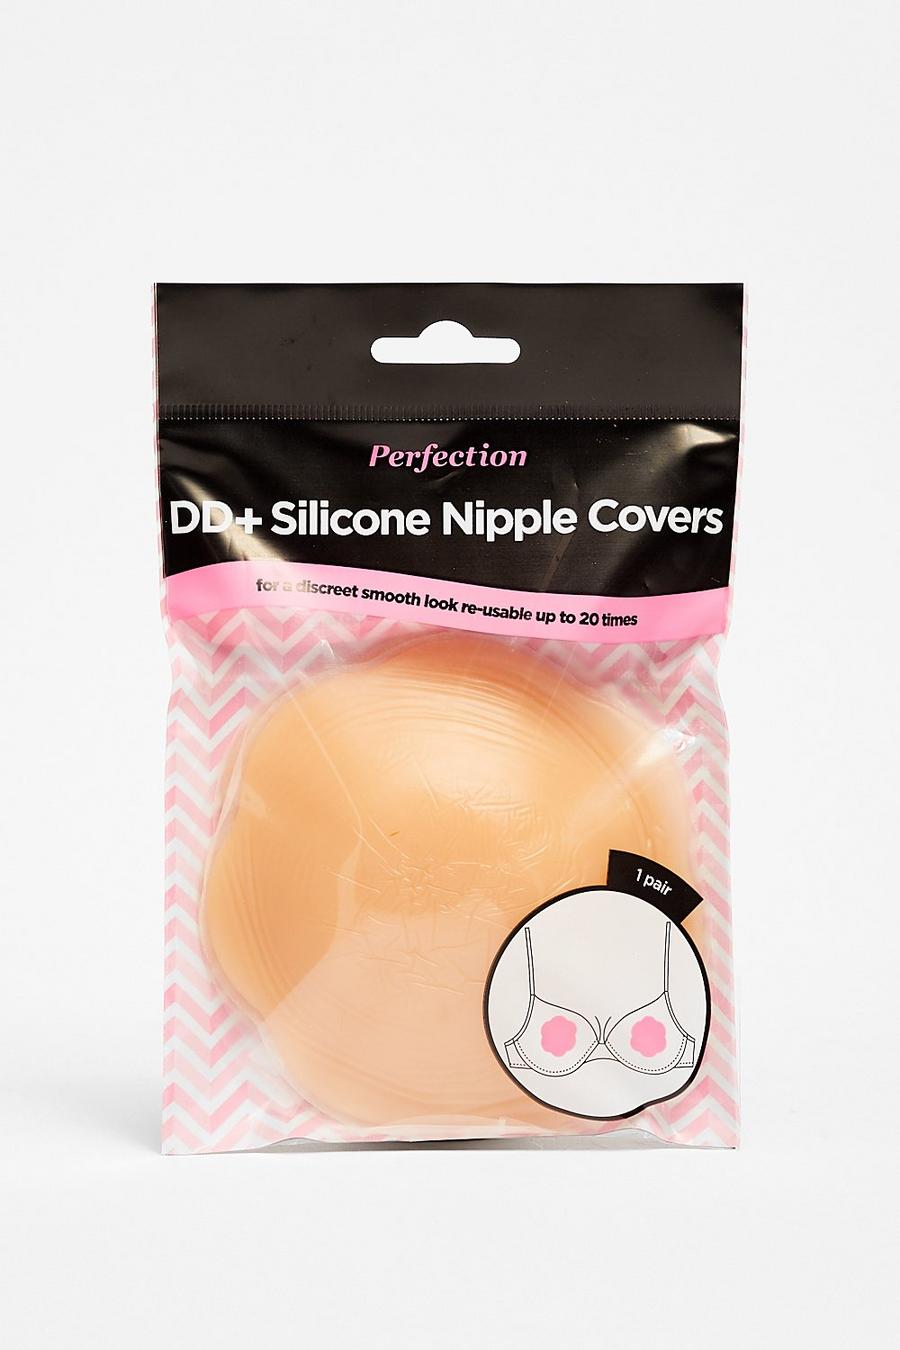 DD+ Silicone Nipple Covers